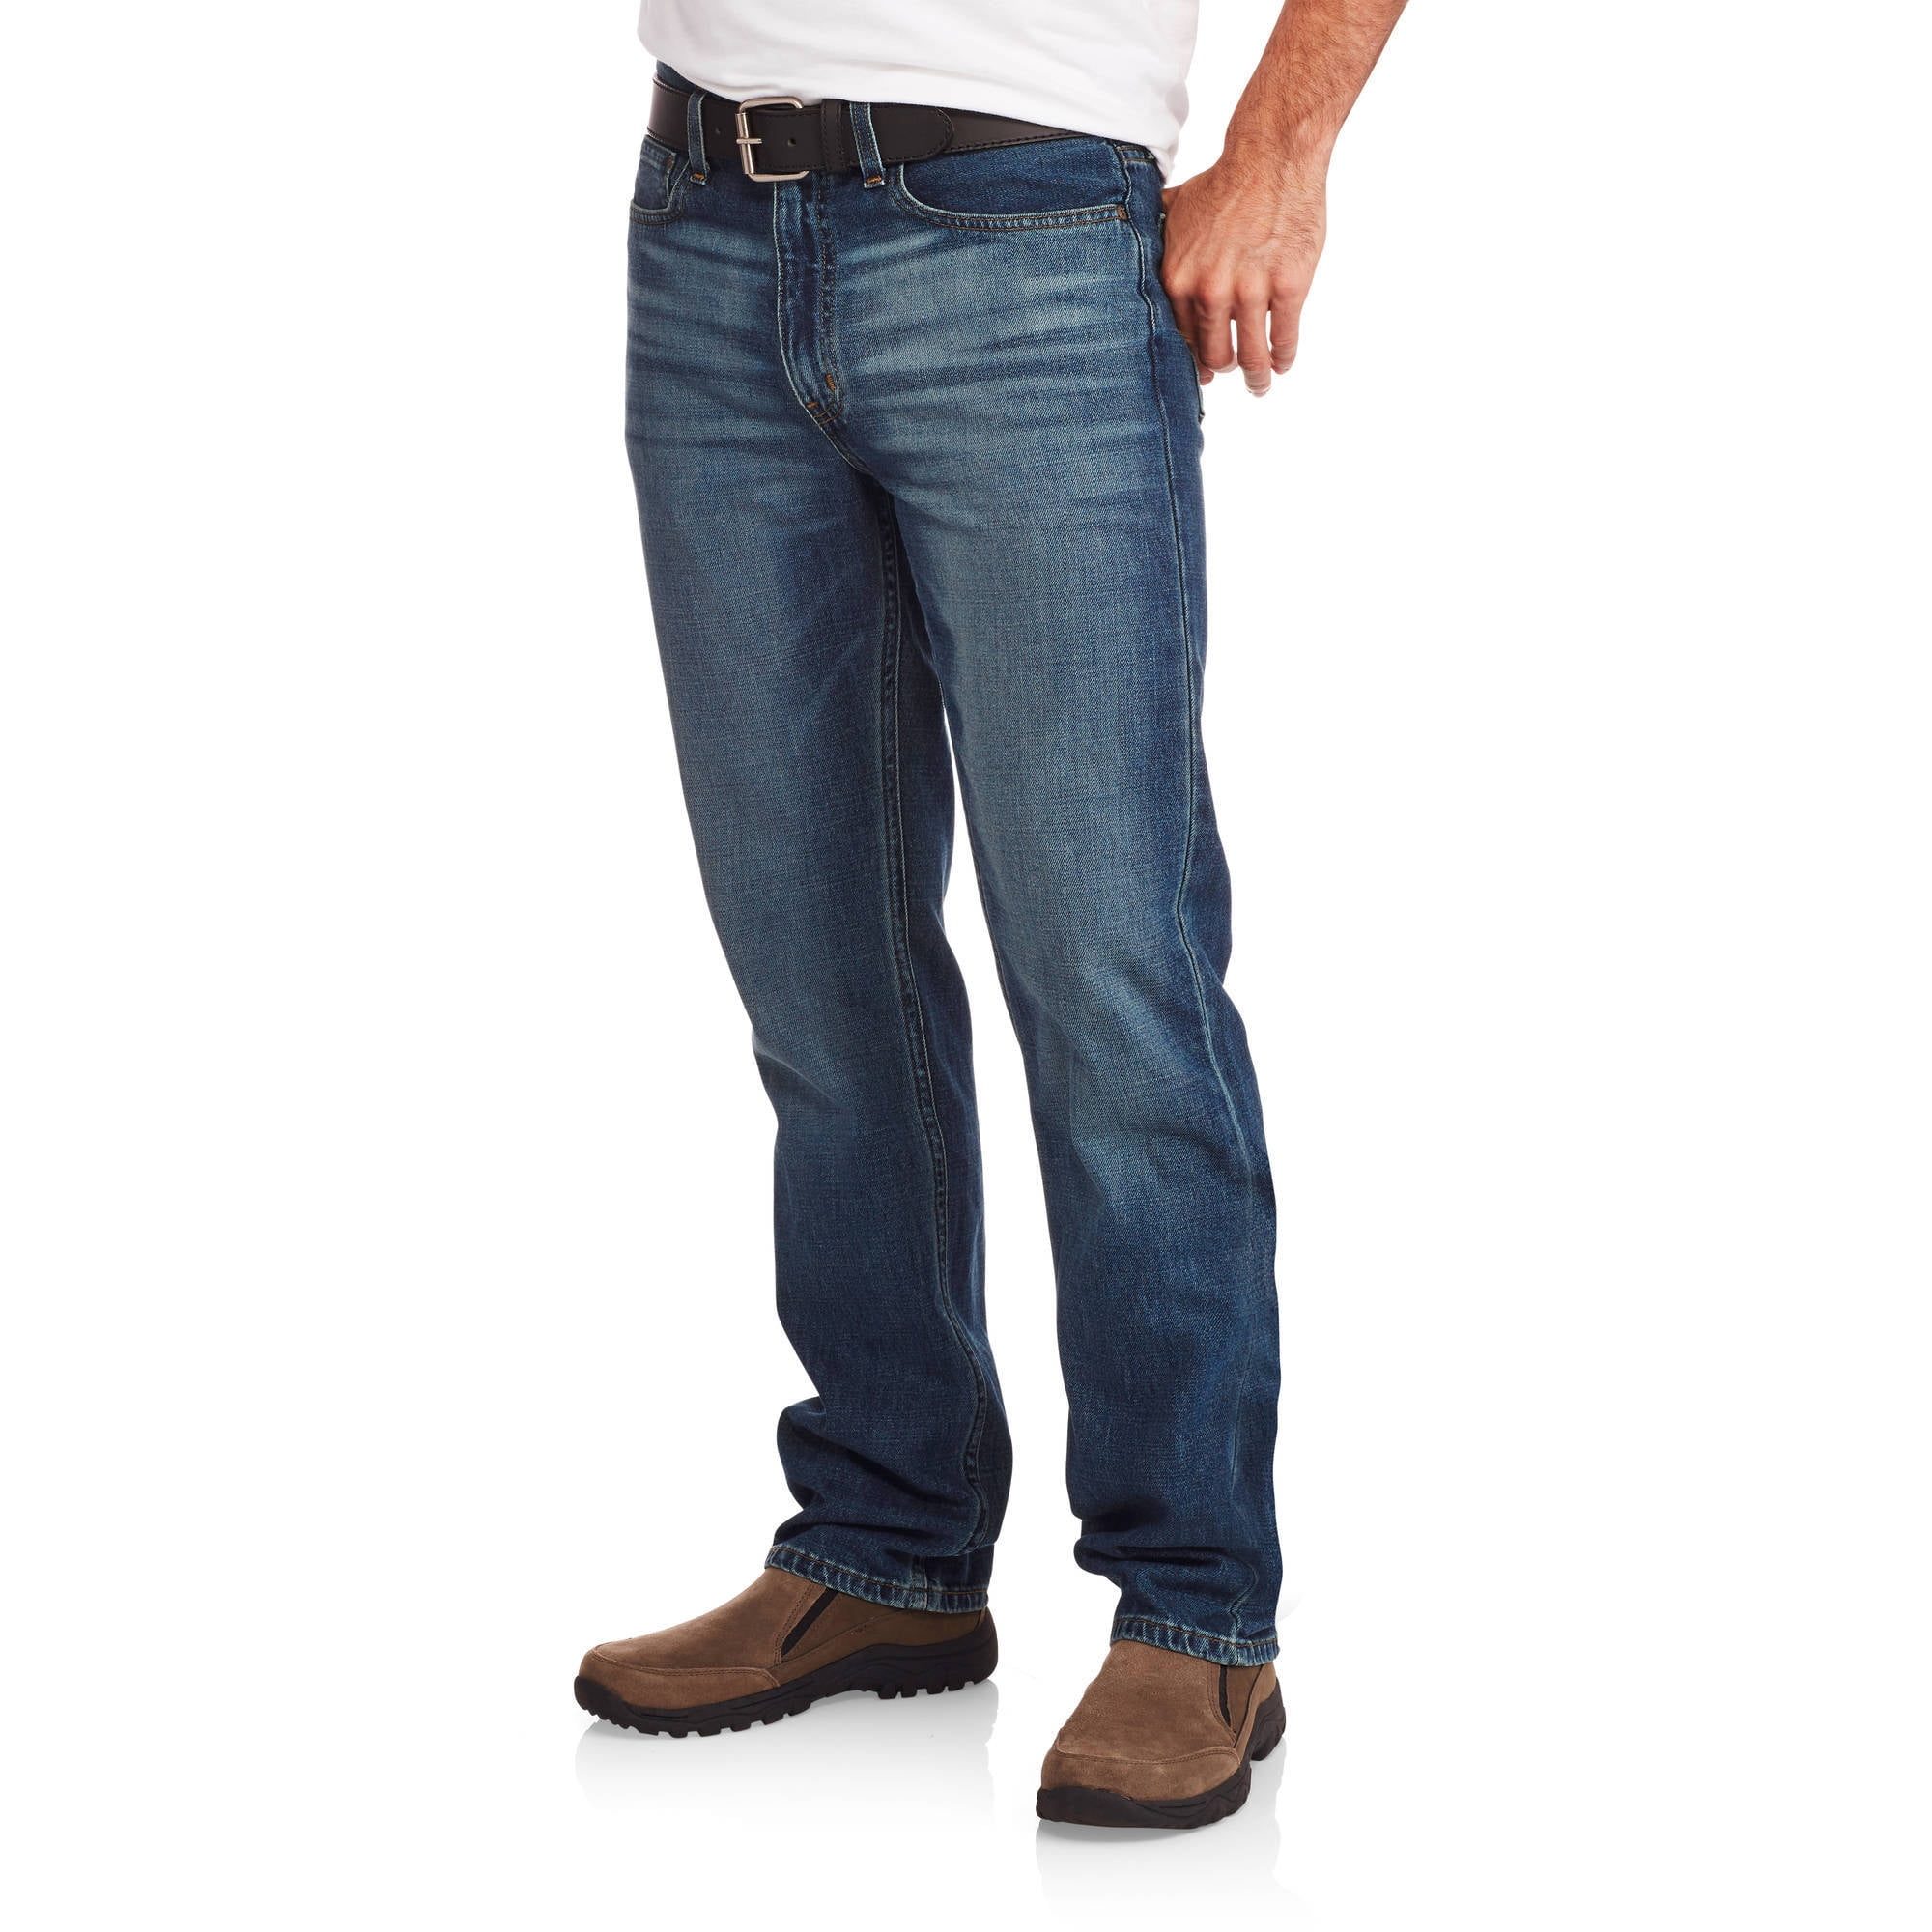 True Face Mens Jeans Basic Plain Straight Leg Trousers Denim Pants Classic Fit Casual Wear Belt Loop Zip Fly Pocket Sizes 30-40